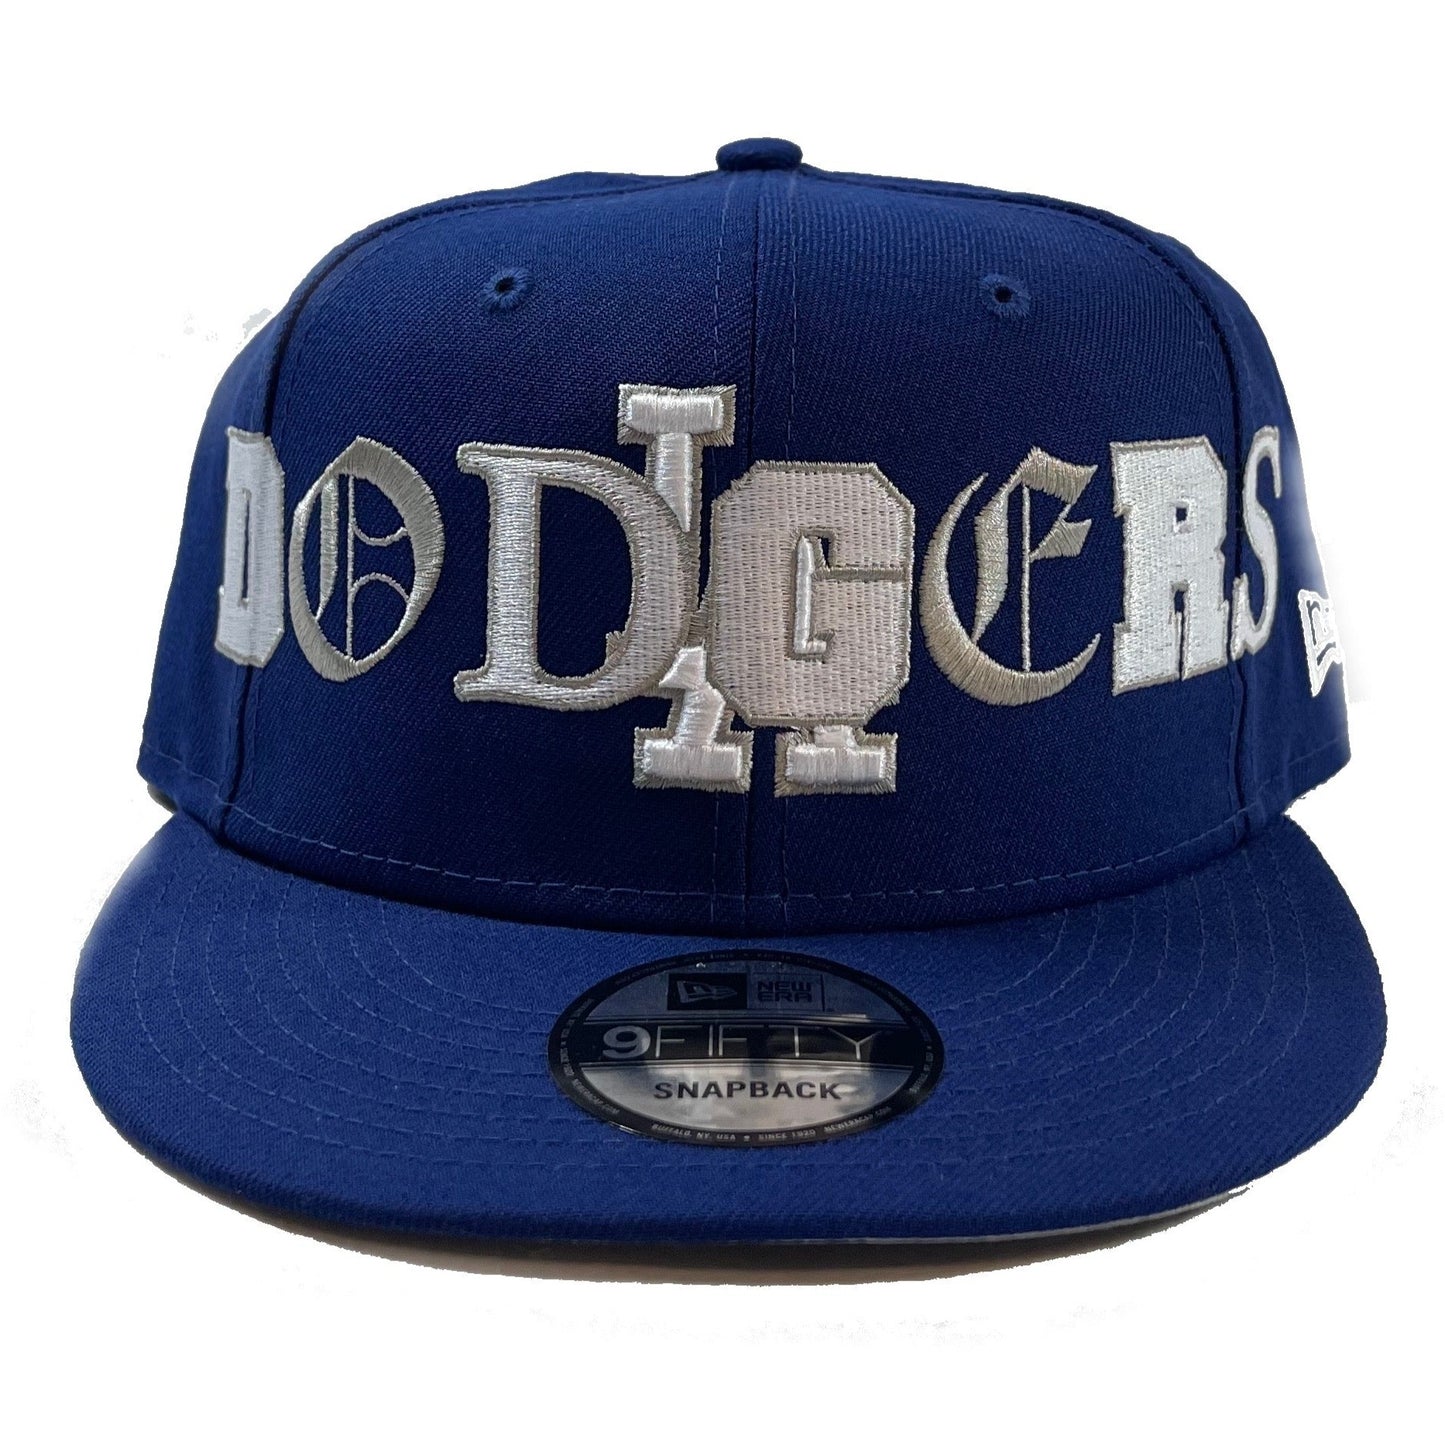 Los Angeles Dodgers (Blue) Snapback